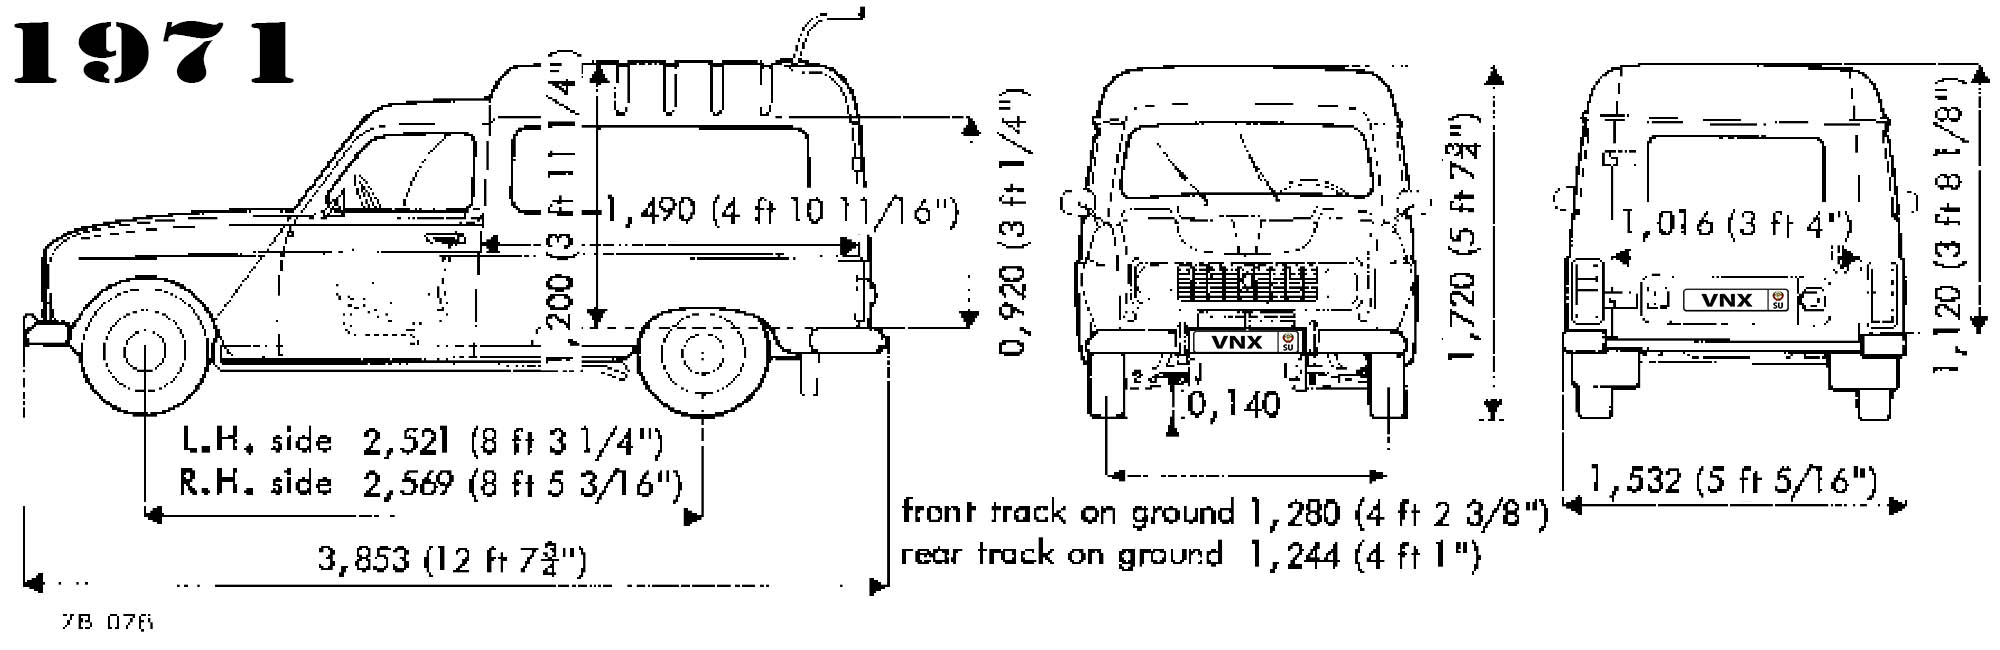 Габаритные размеры Рено 4 грузопассажирский фургон (dimensions Renault 4 Sided Van Long Chassis)